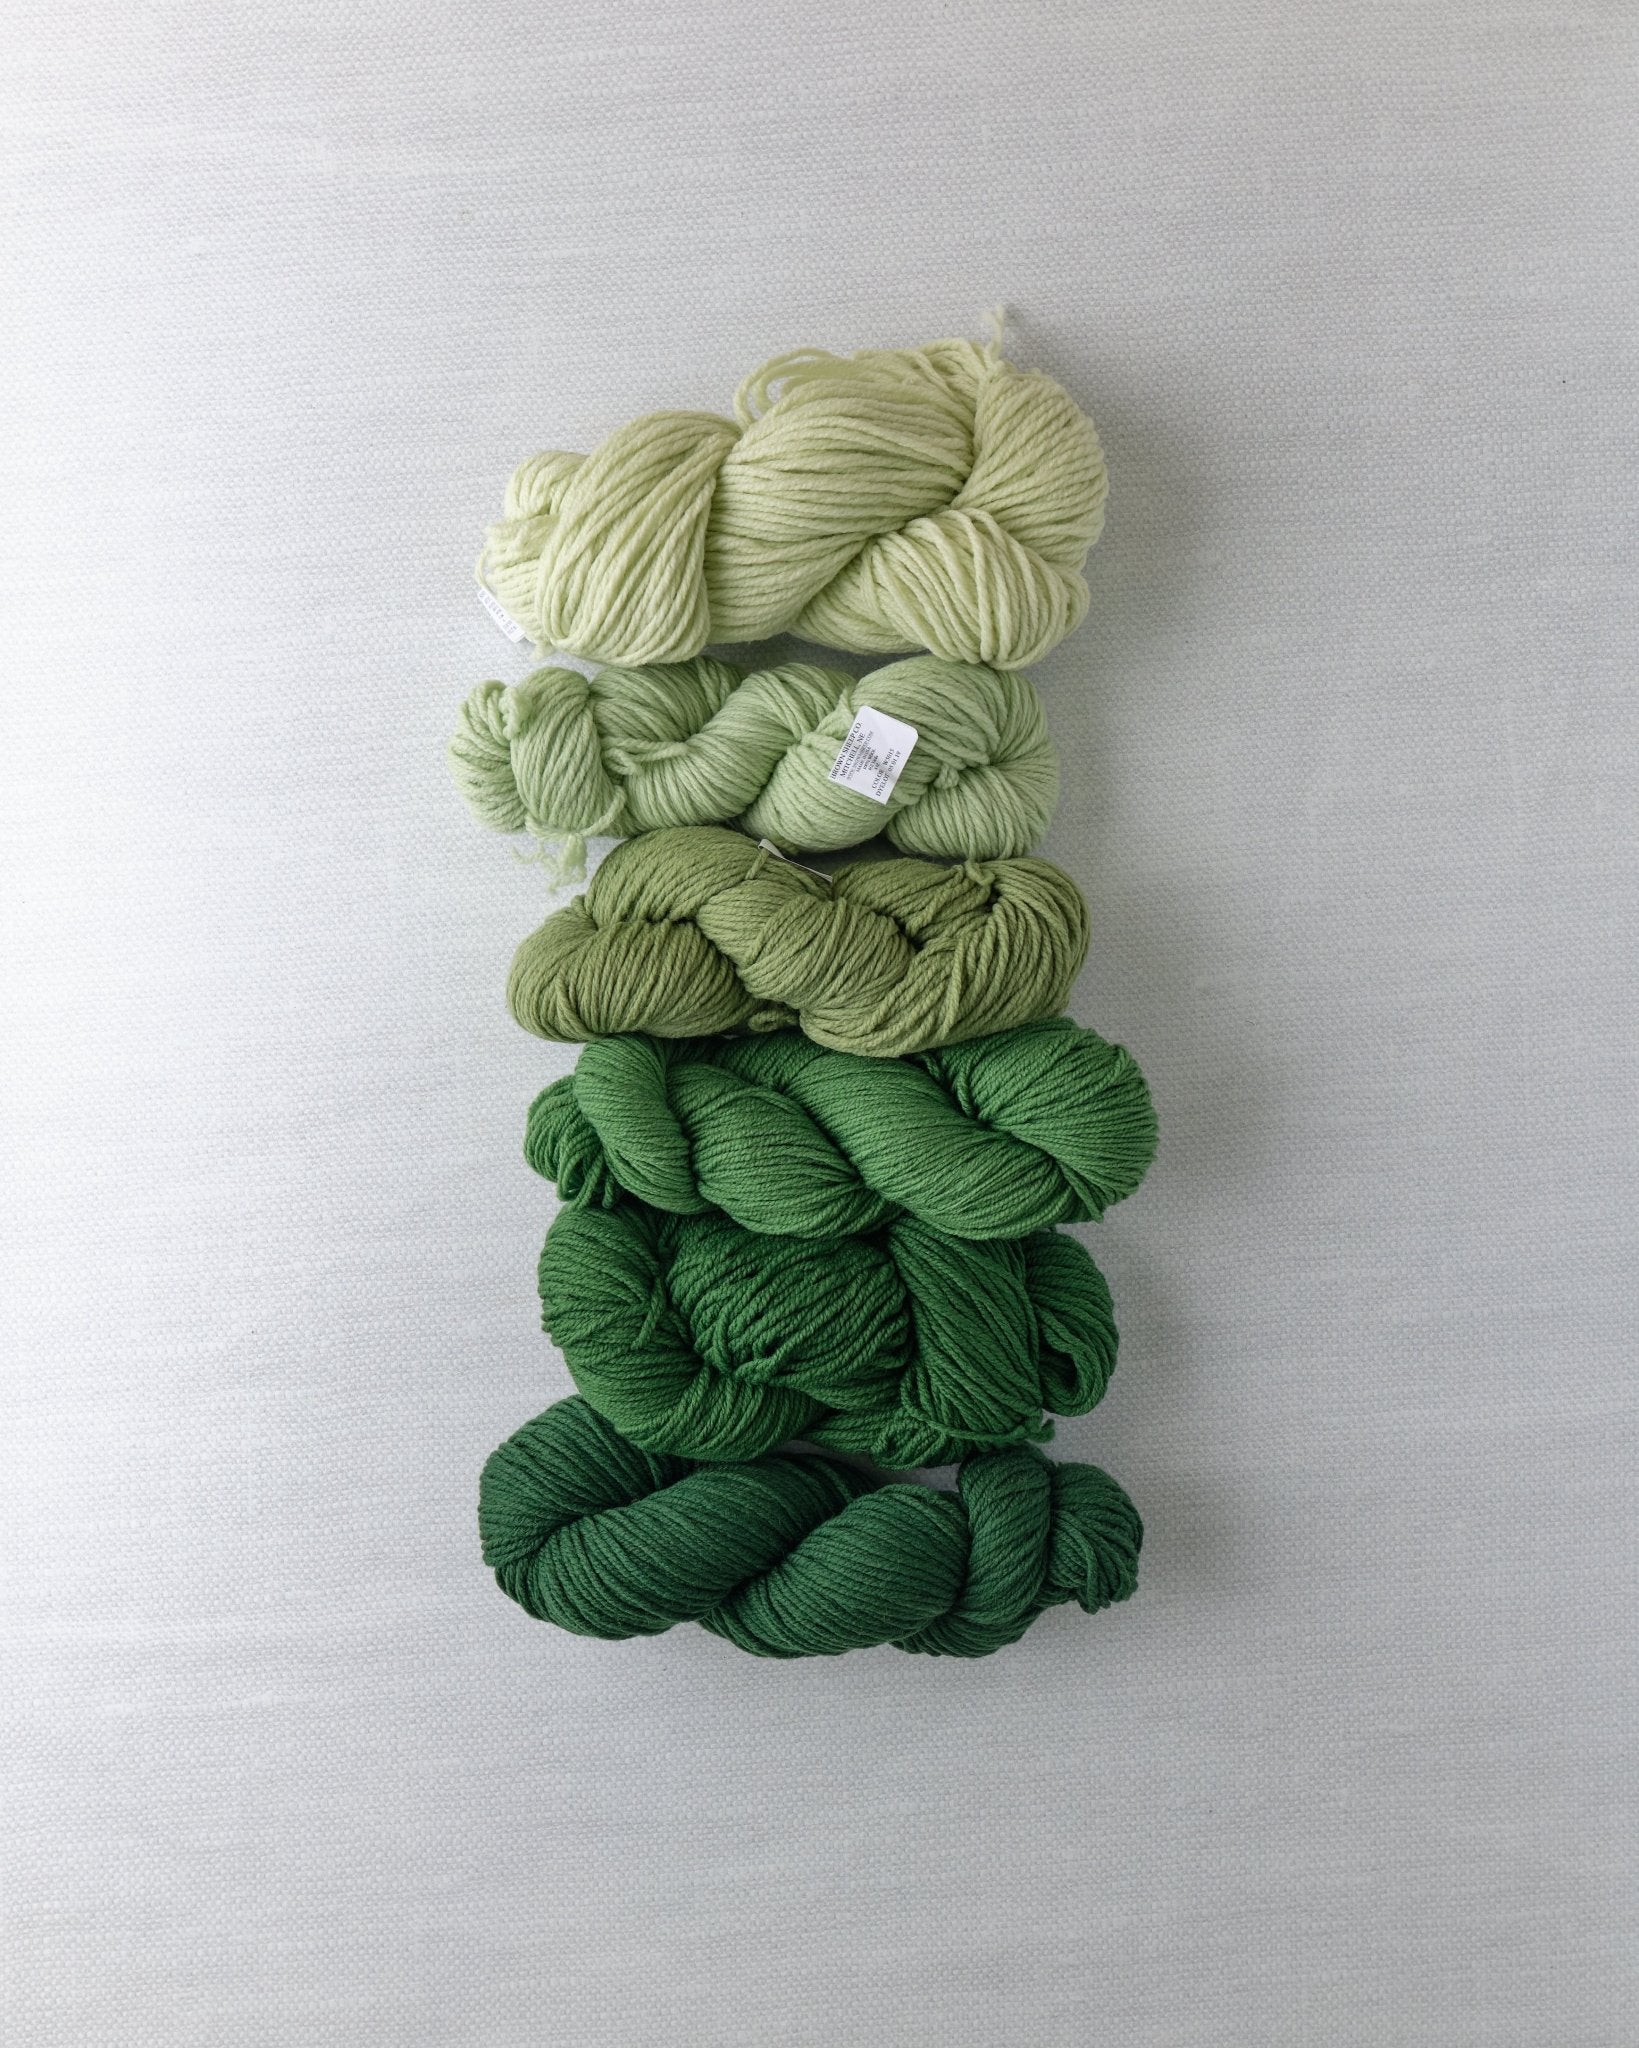 Waverly Wool Needlepoint Yarn - 5001-5006 - HM Nabavian